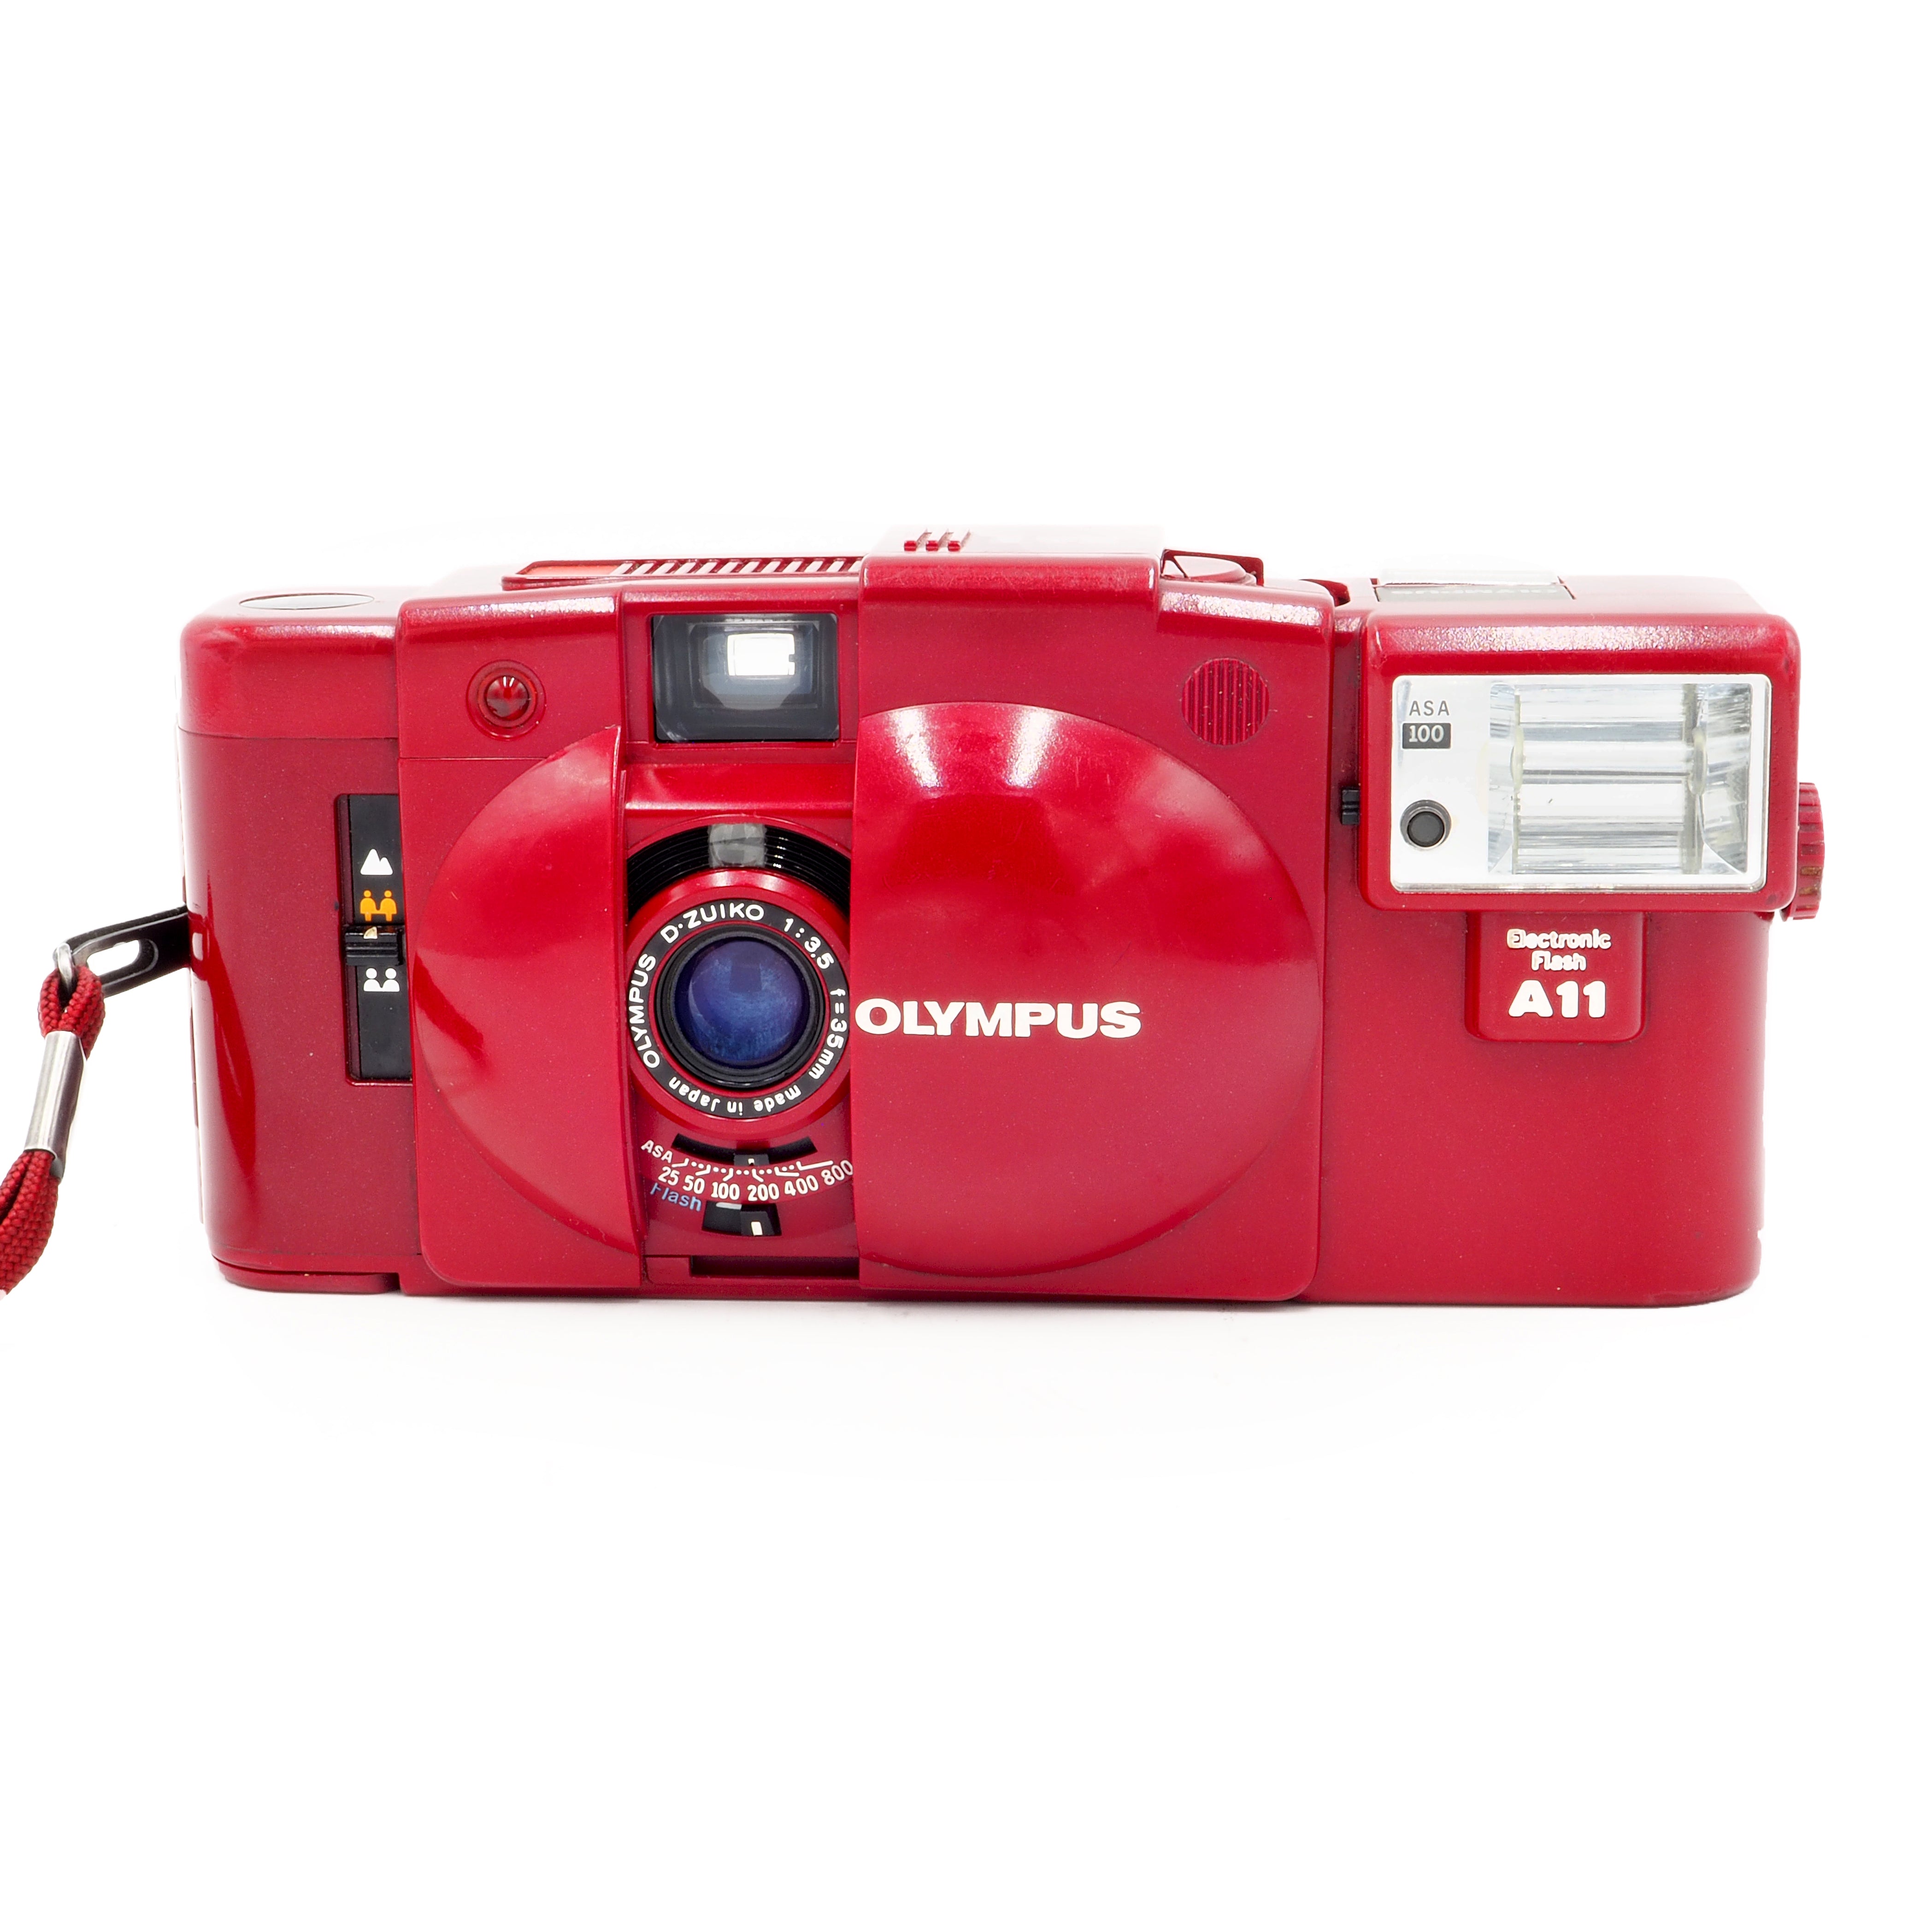 OLYMPUS XA2 A11 RED 赤 #453 【超歓迎された】 - フィルムカメラ